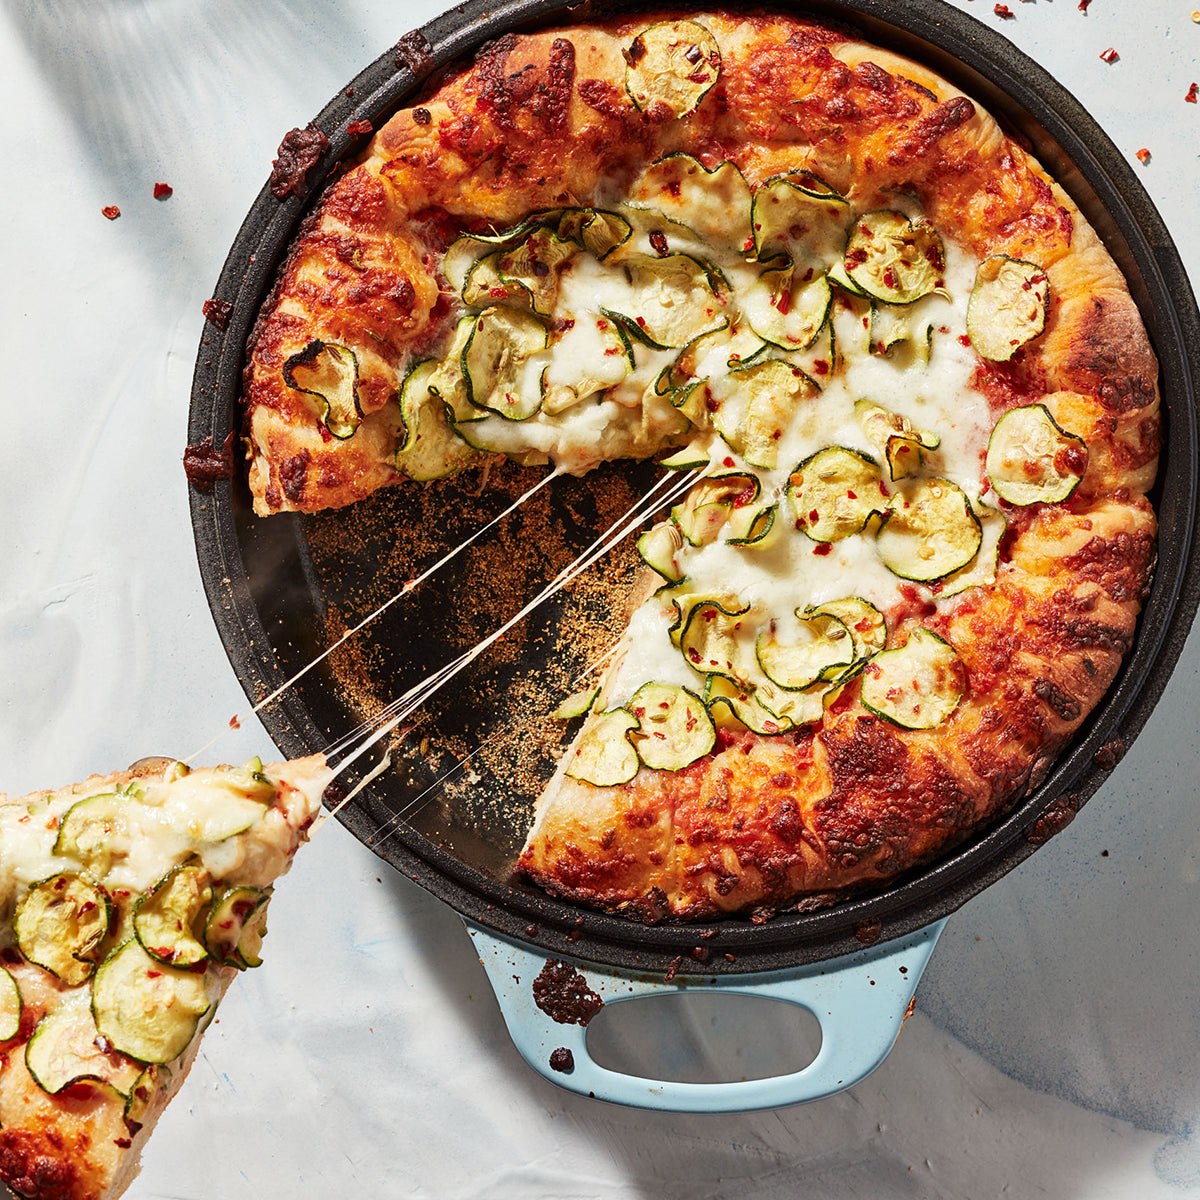 Round the Chuckbox: Cast iron skillet pizza